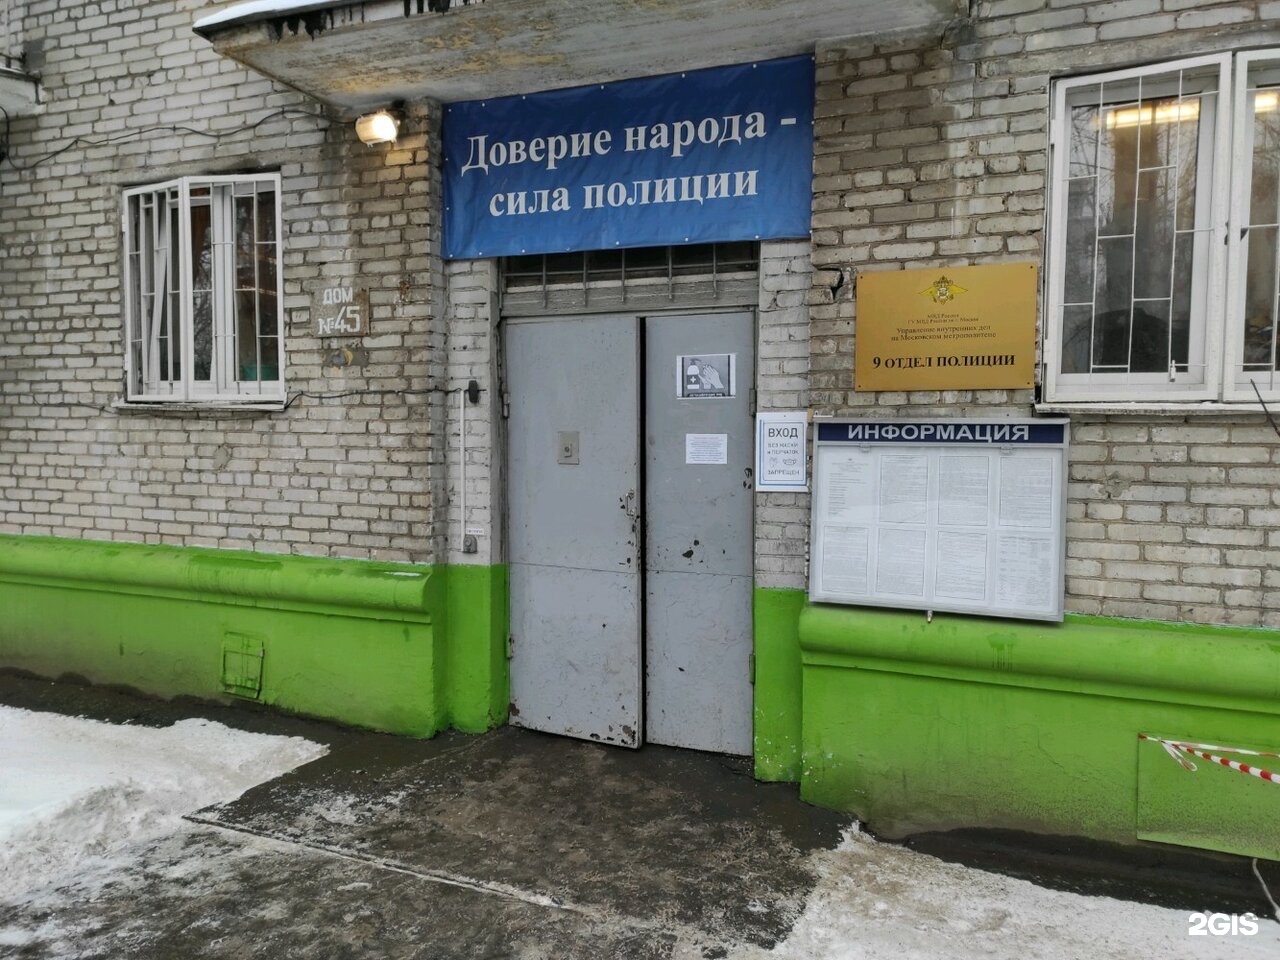 9 Отдел полиции на Московском метрополитене